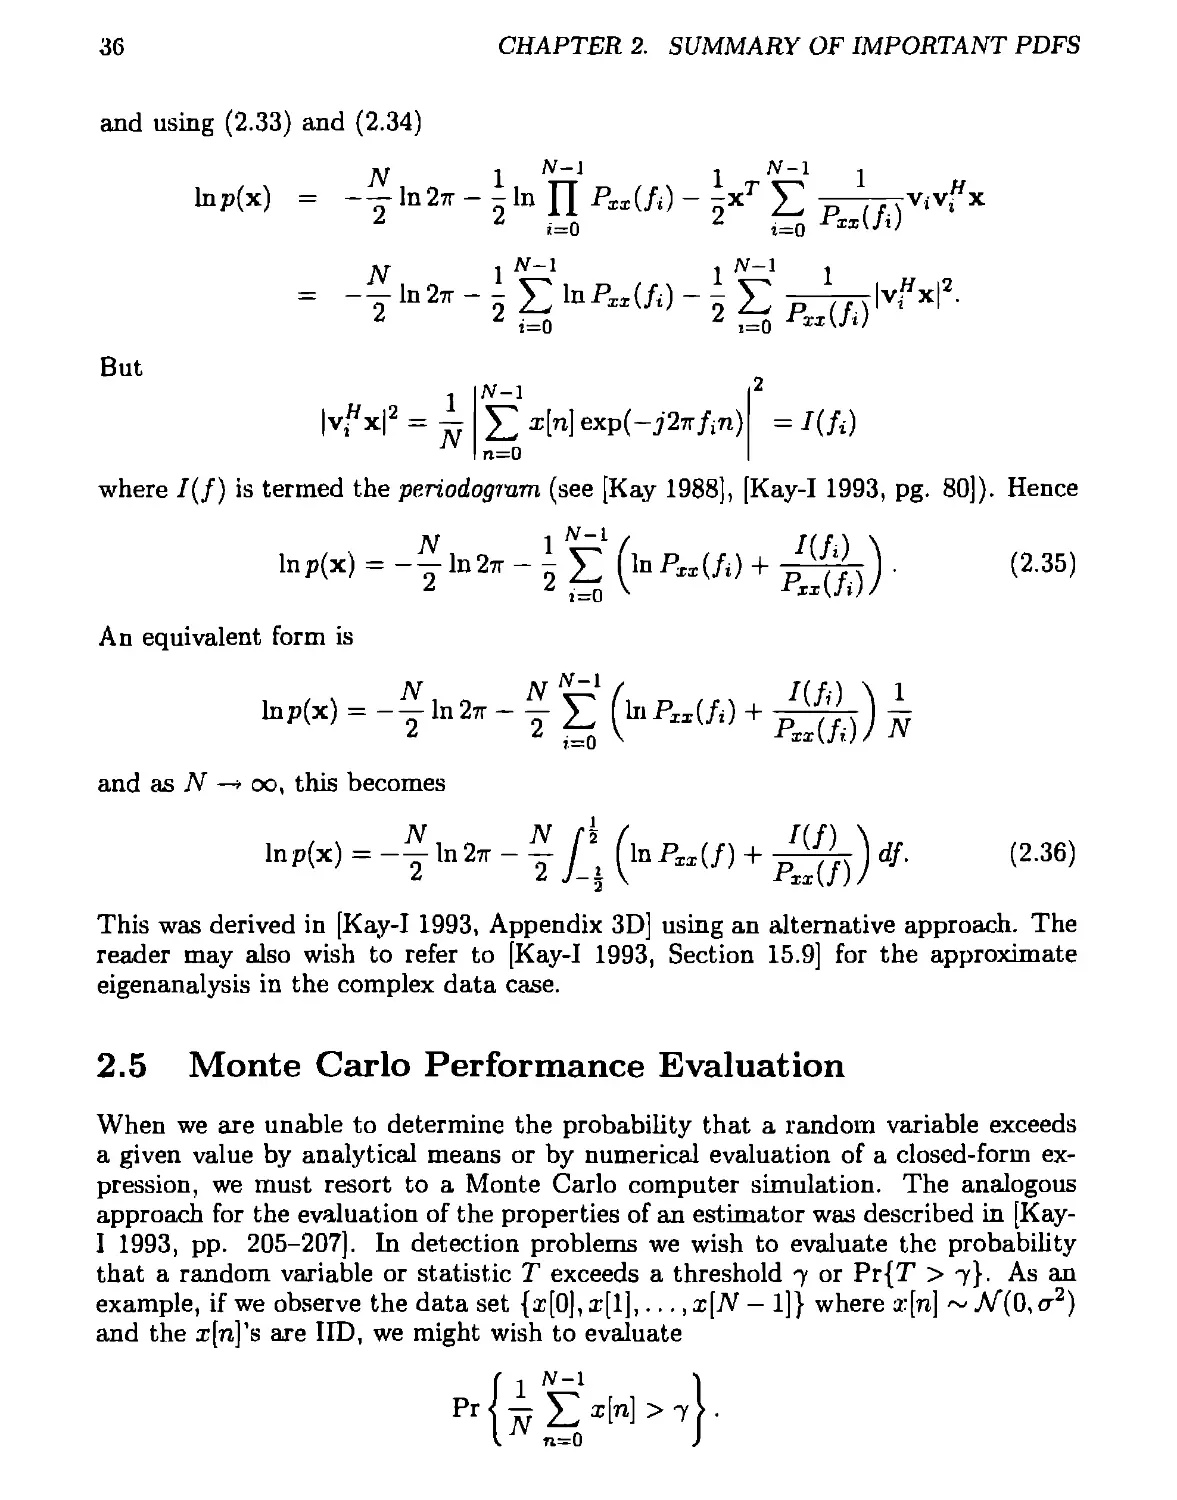 2.5 Monte Carlo Performance Evaluation